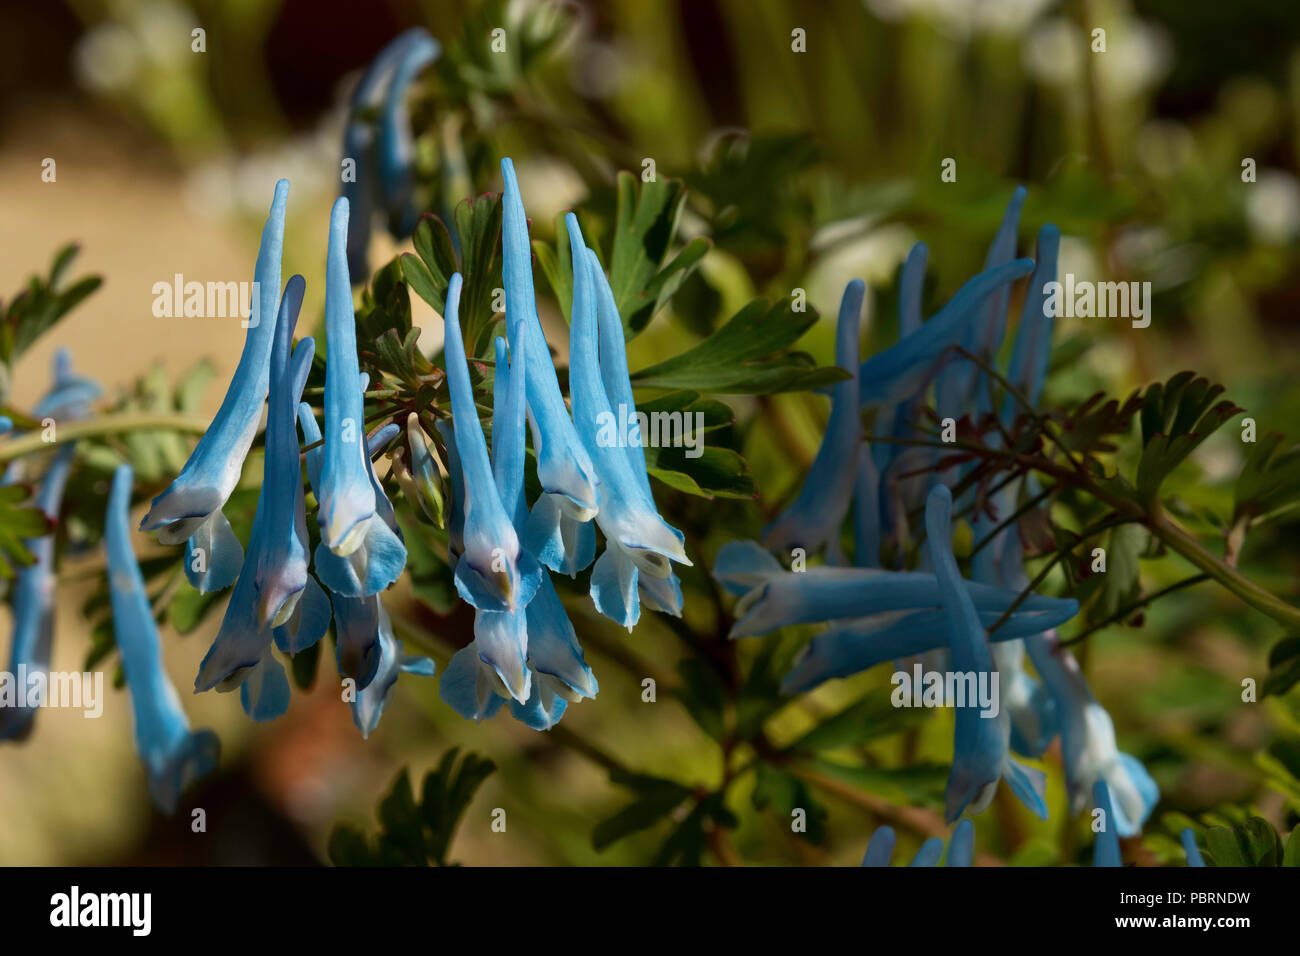 Corydalis curviflora rosthornii 'Blue Heron'. Stock Photo